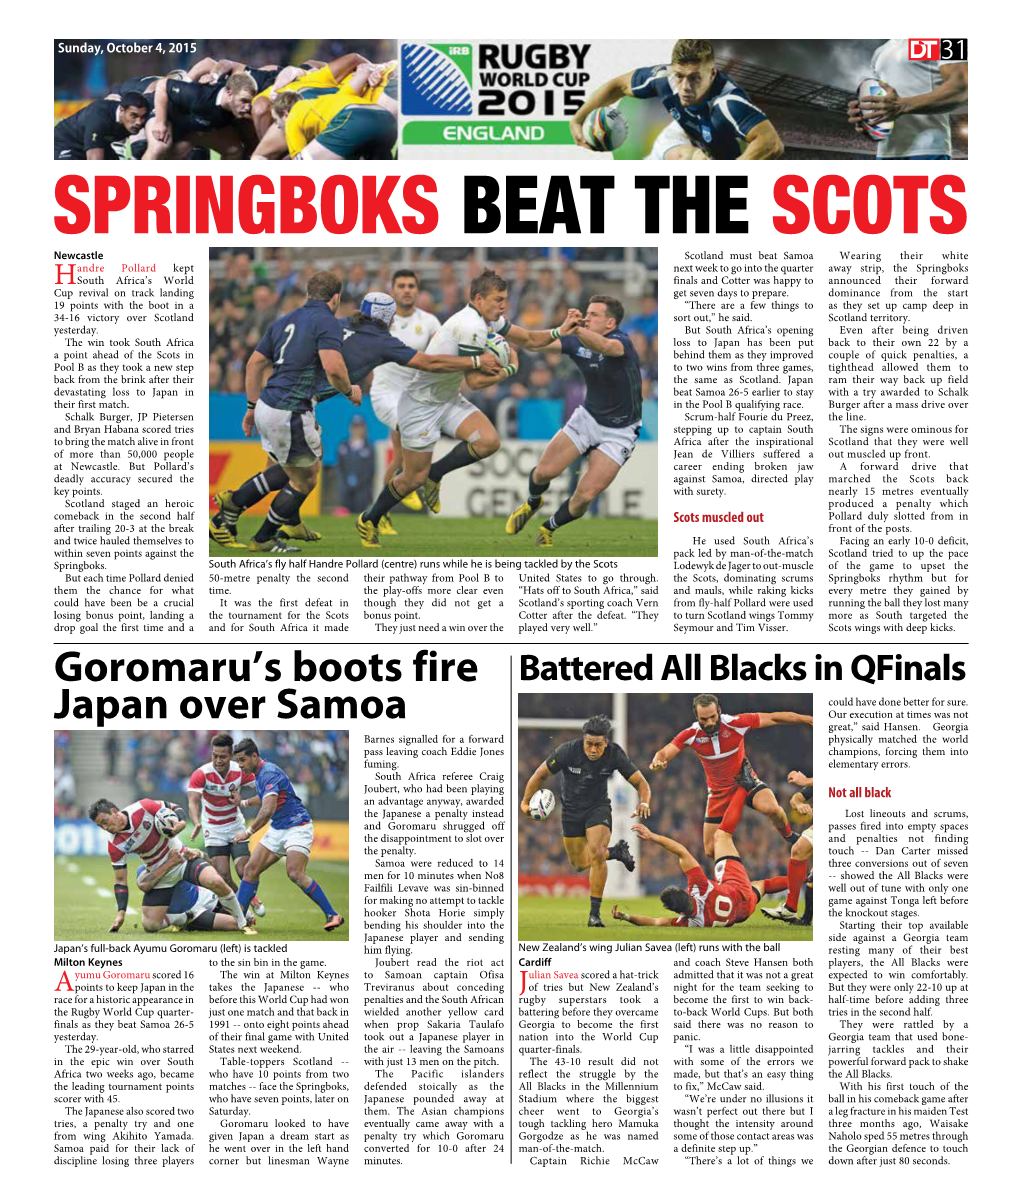 Springboks Beat the Scots